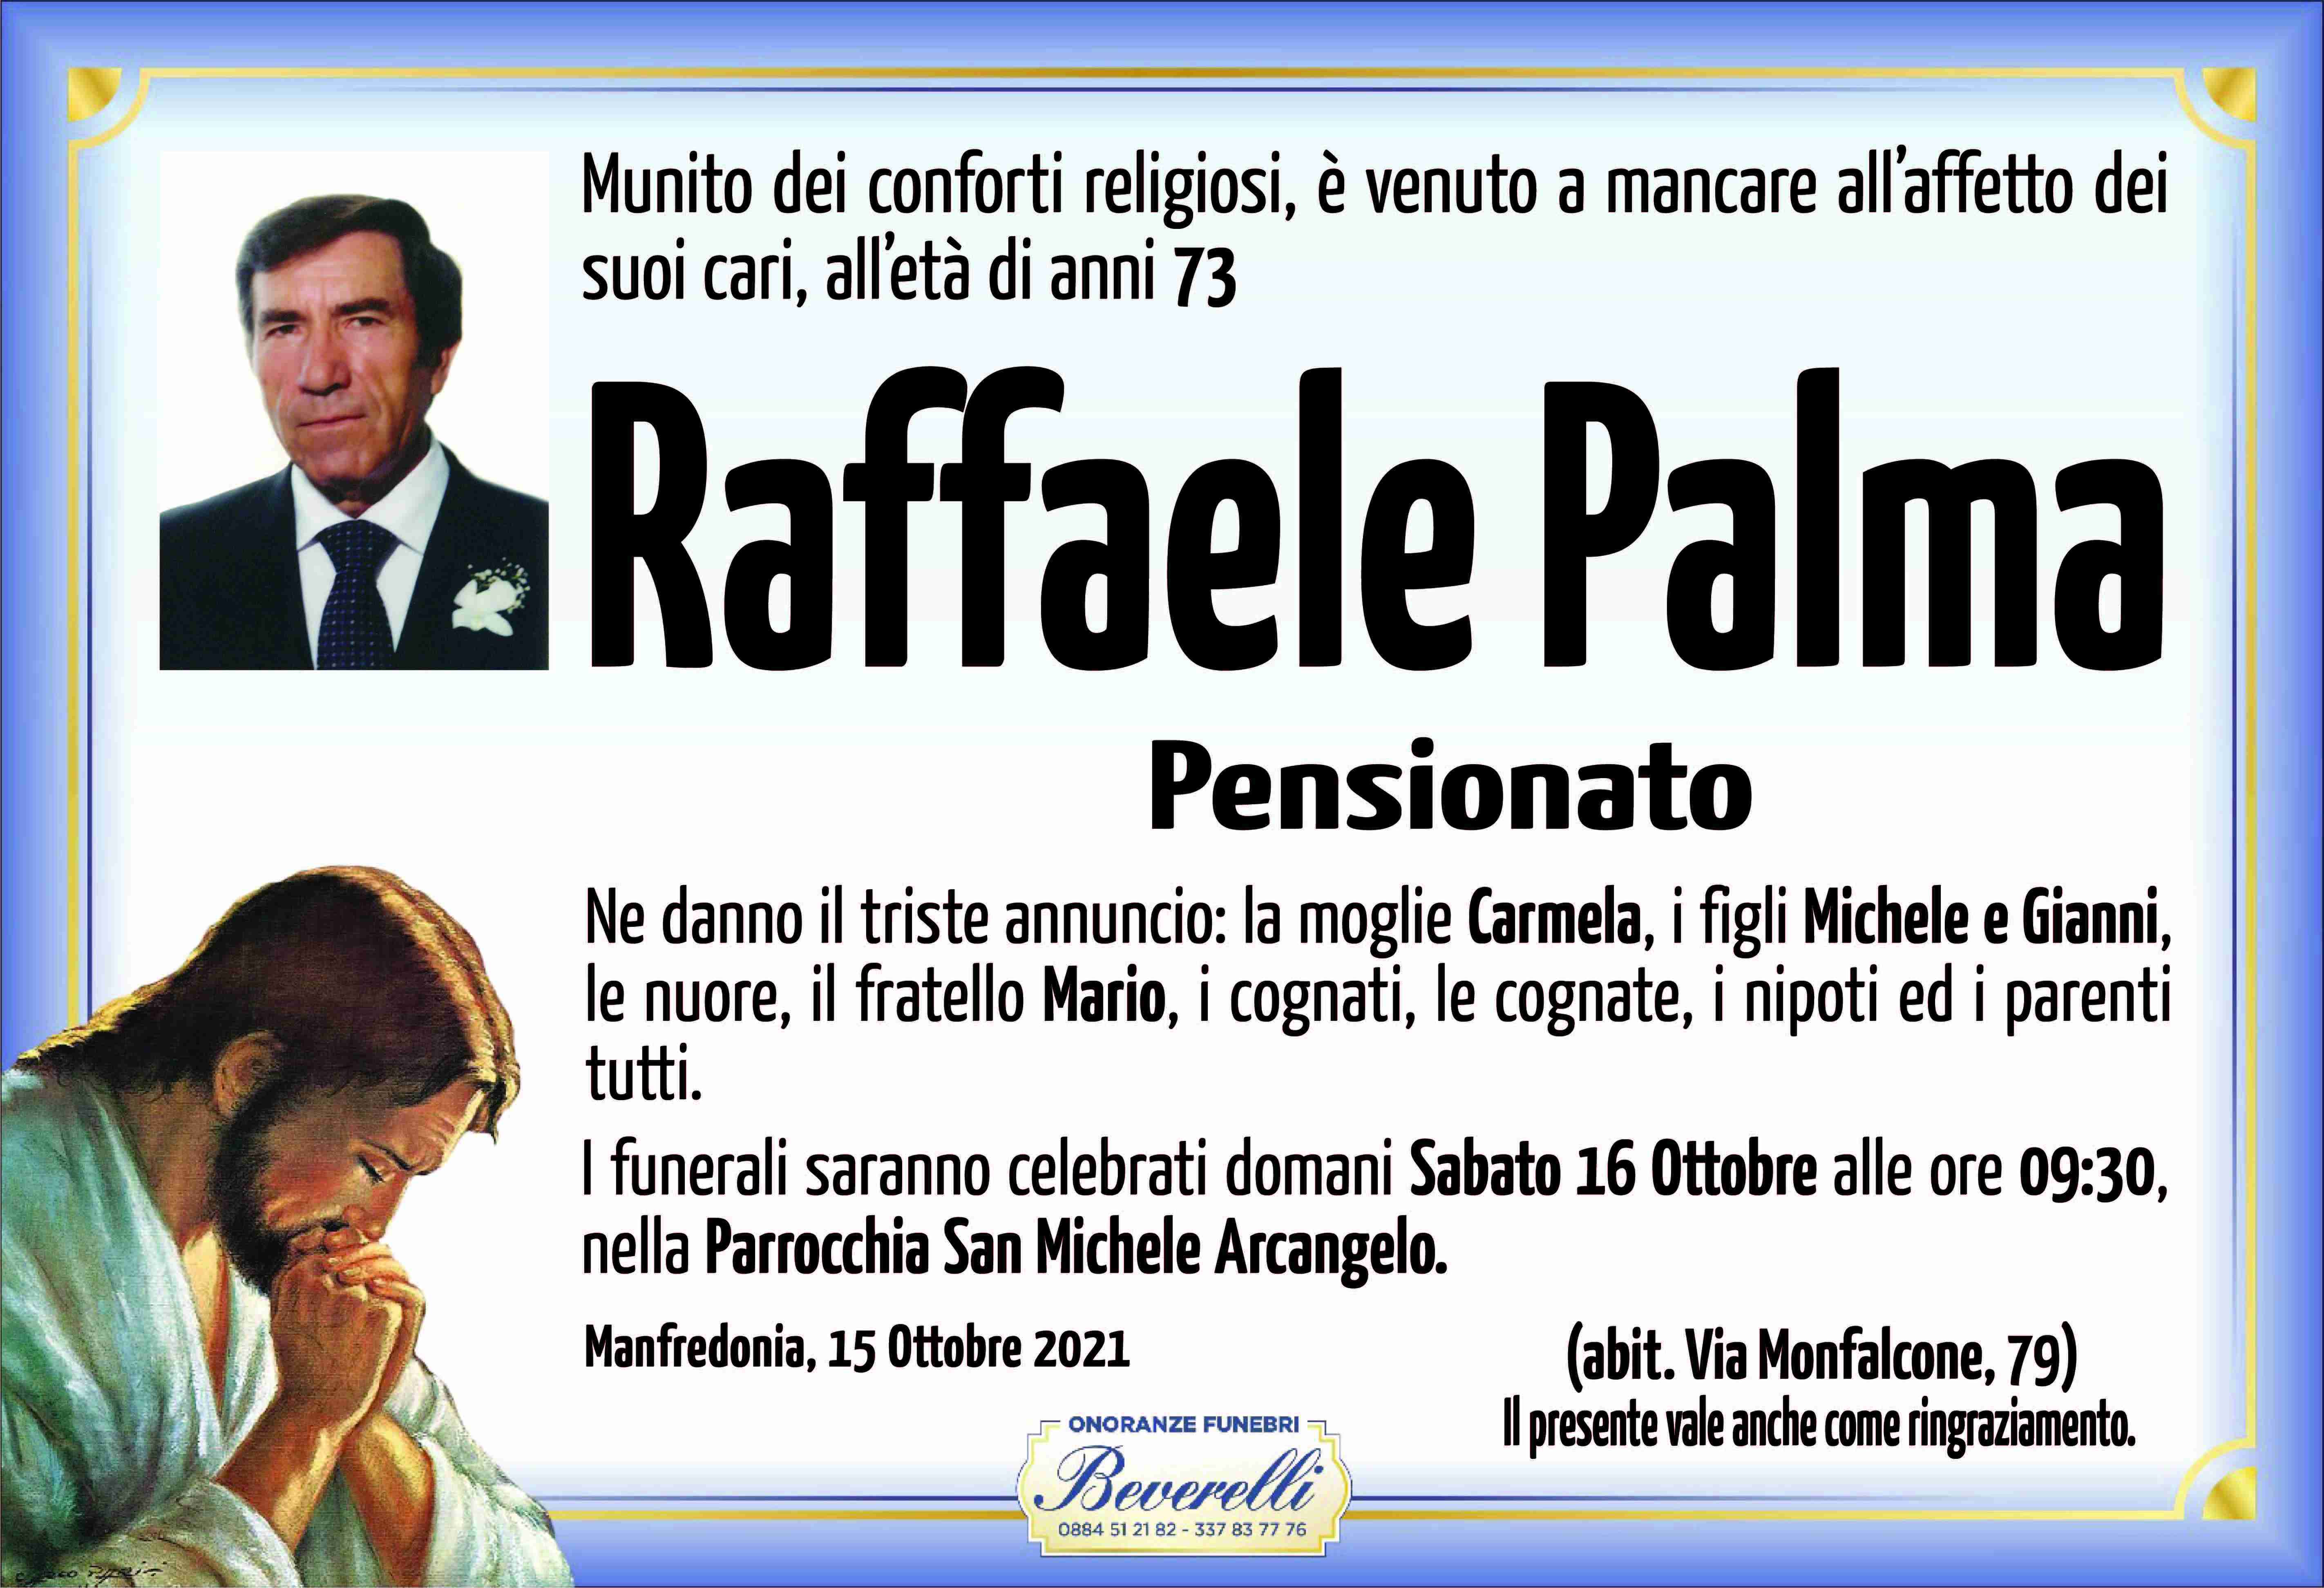 Raffaele Palma